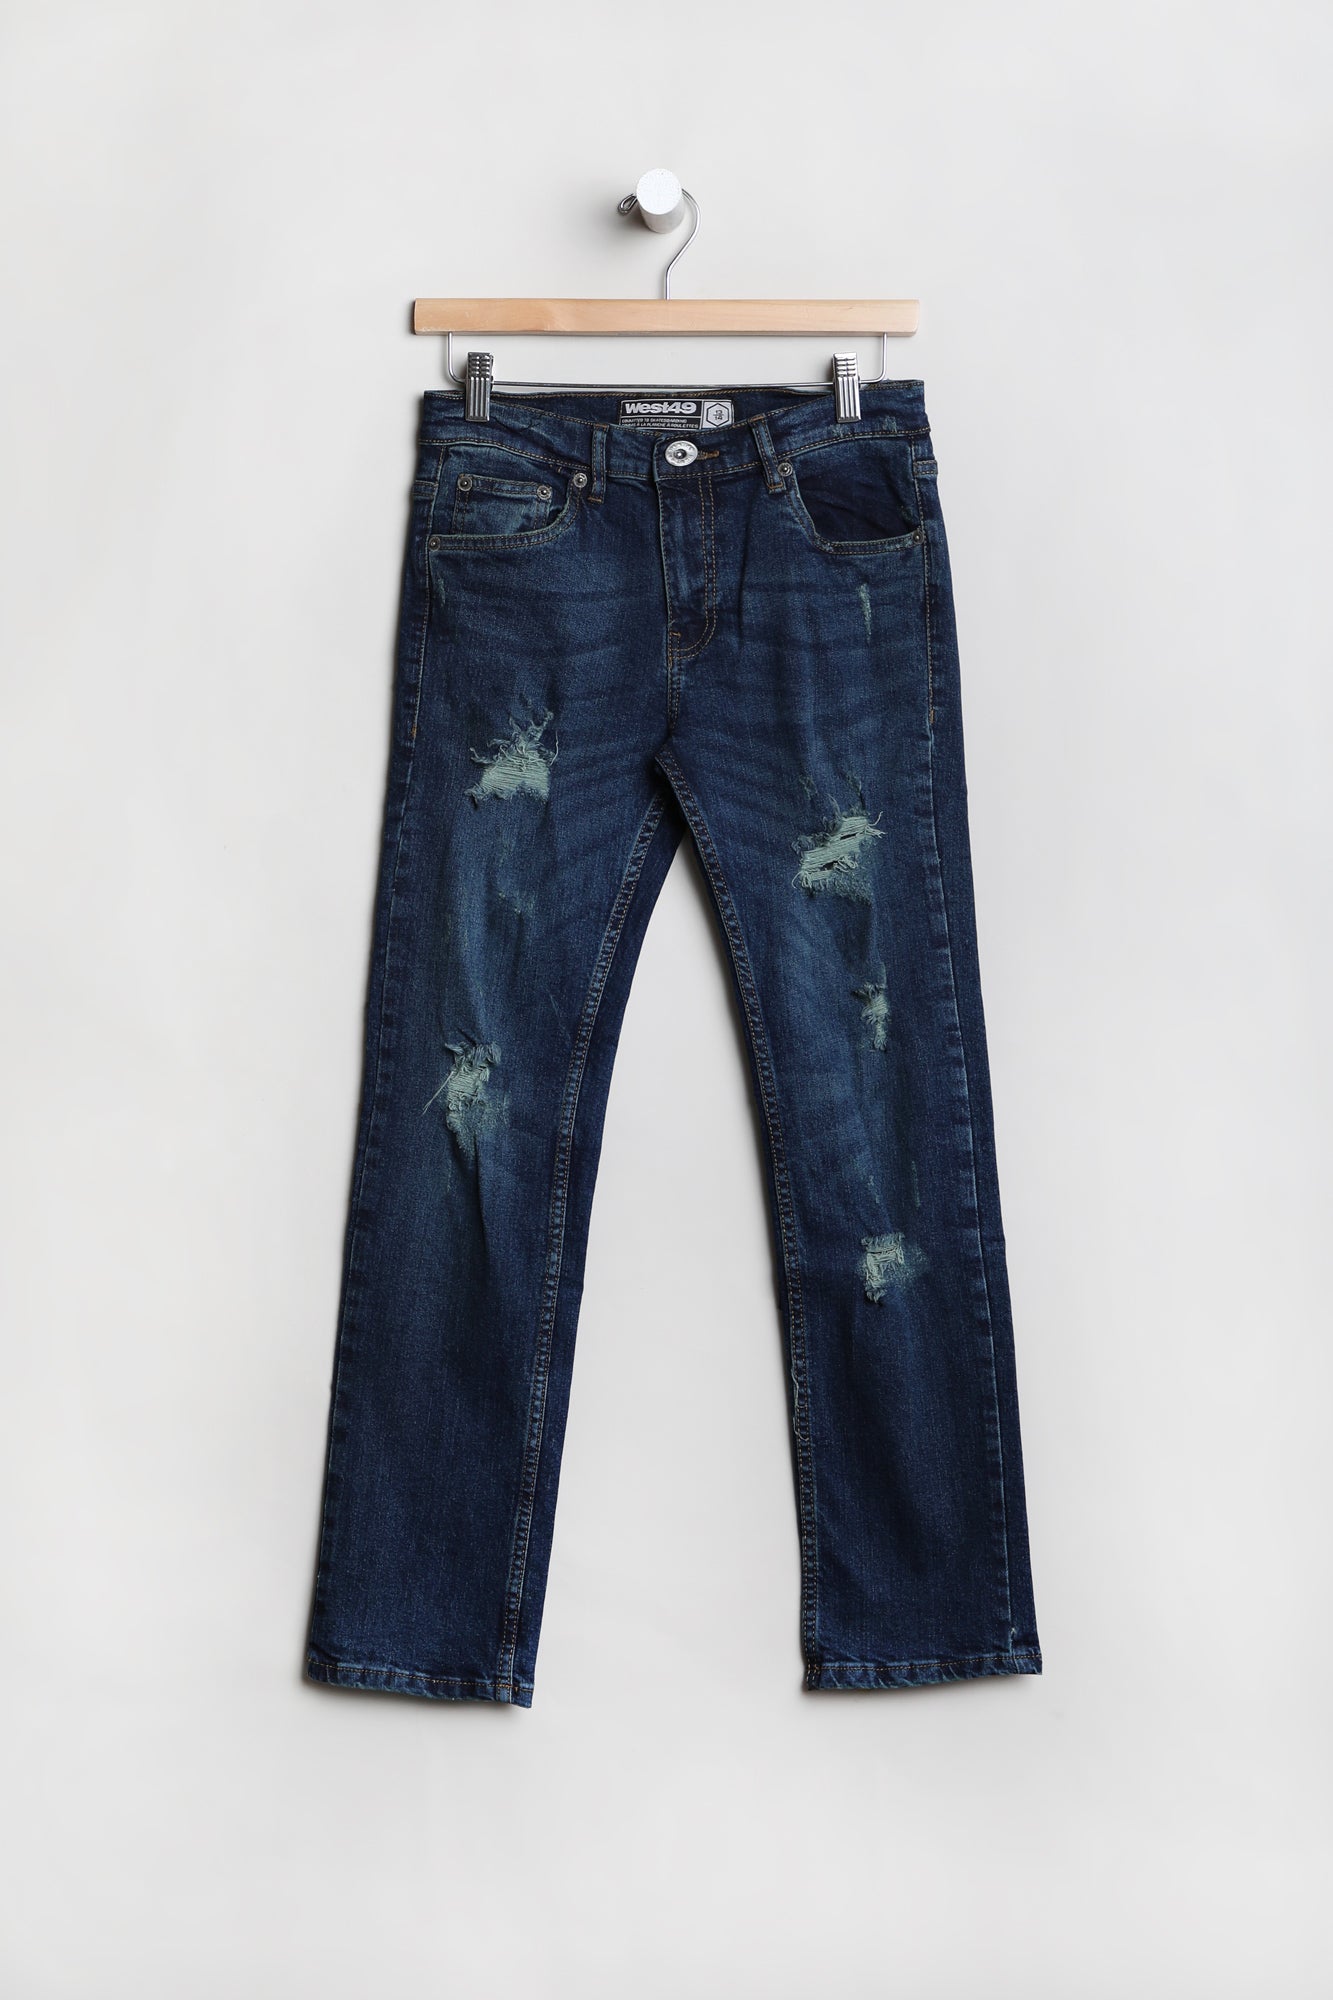 West49 Youth Distressed Slim Jeans - Rinse Denim /